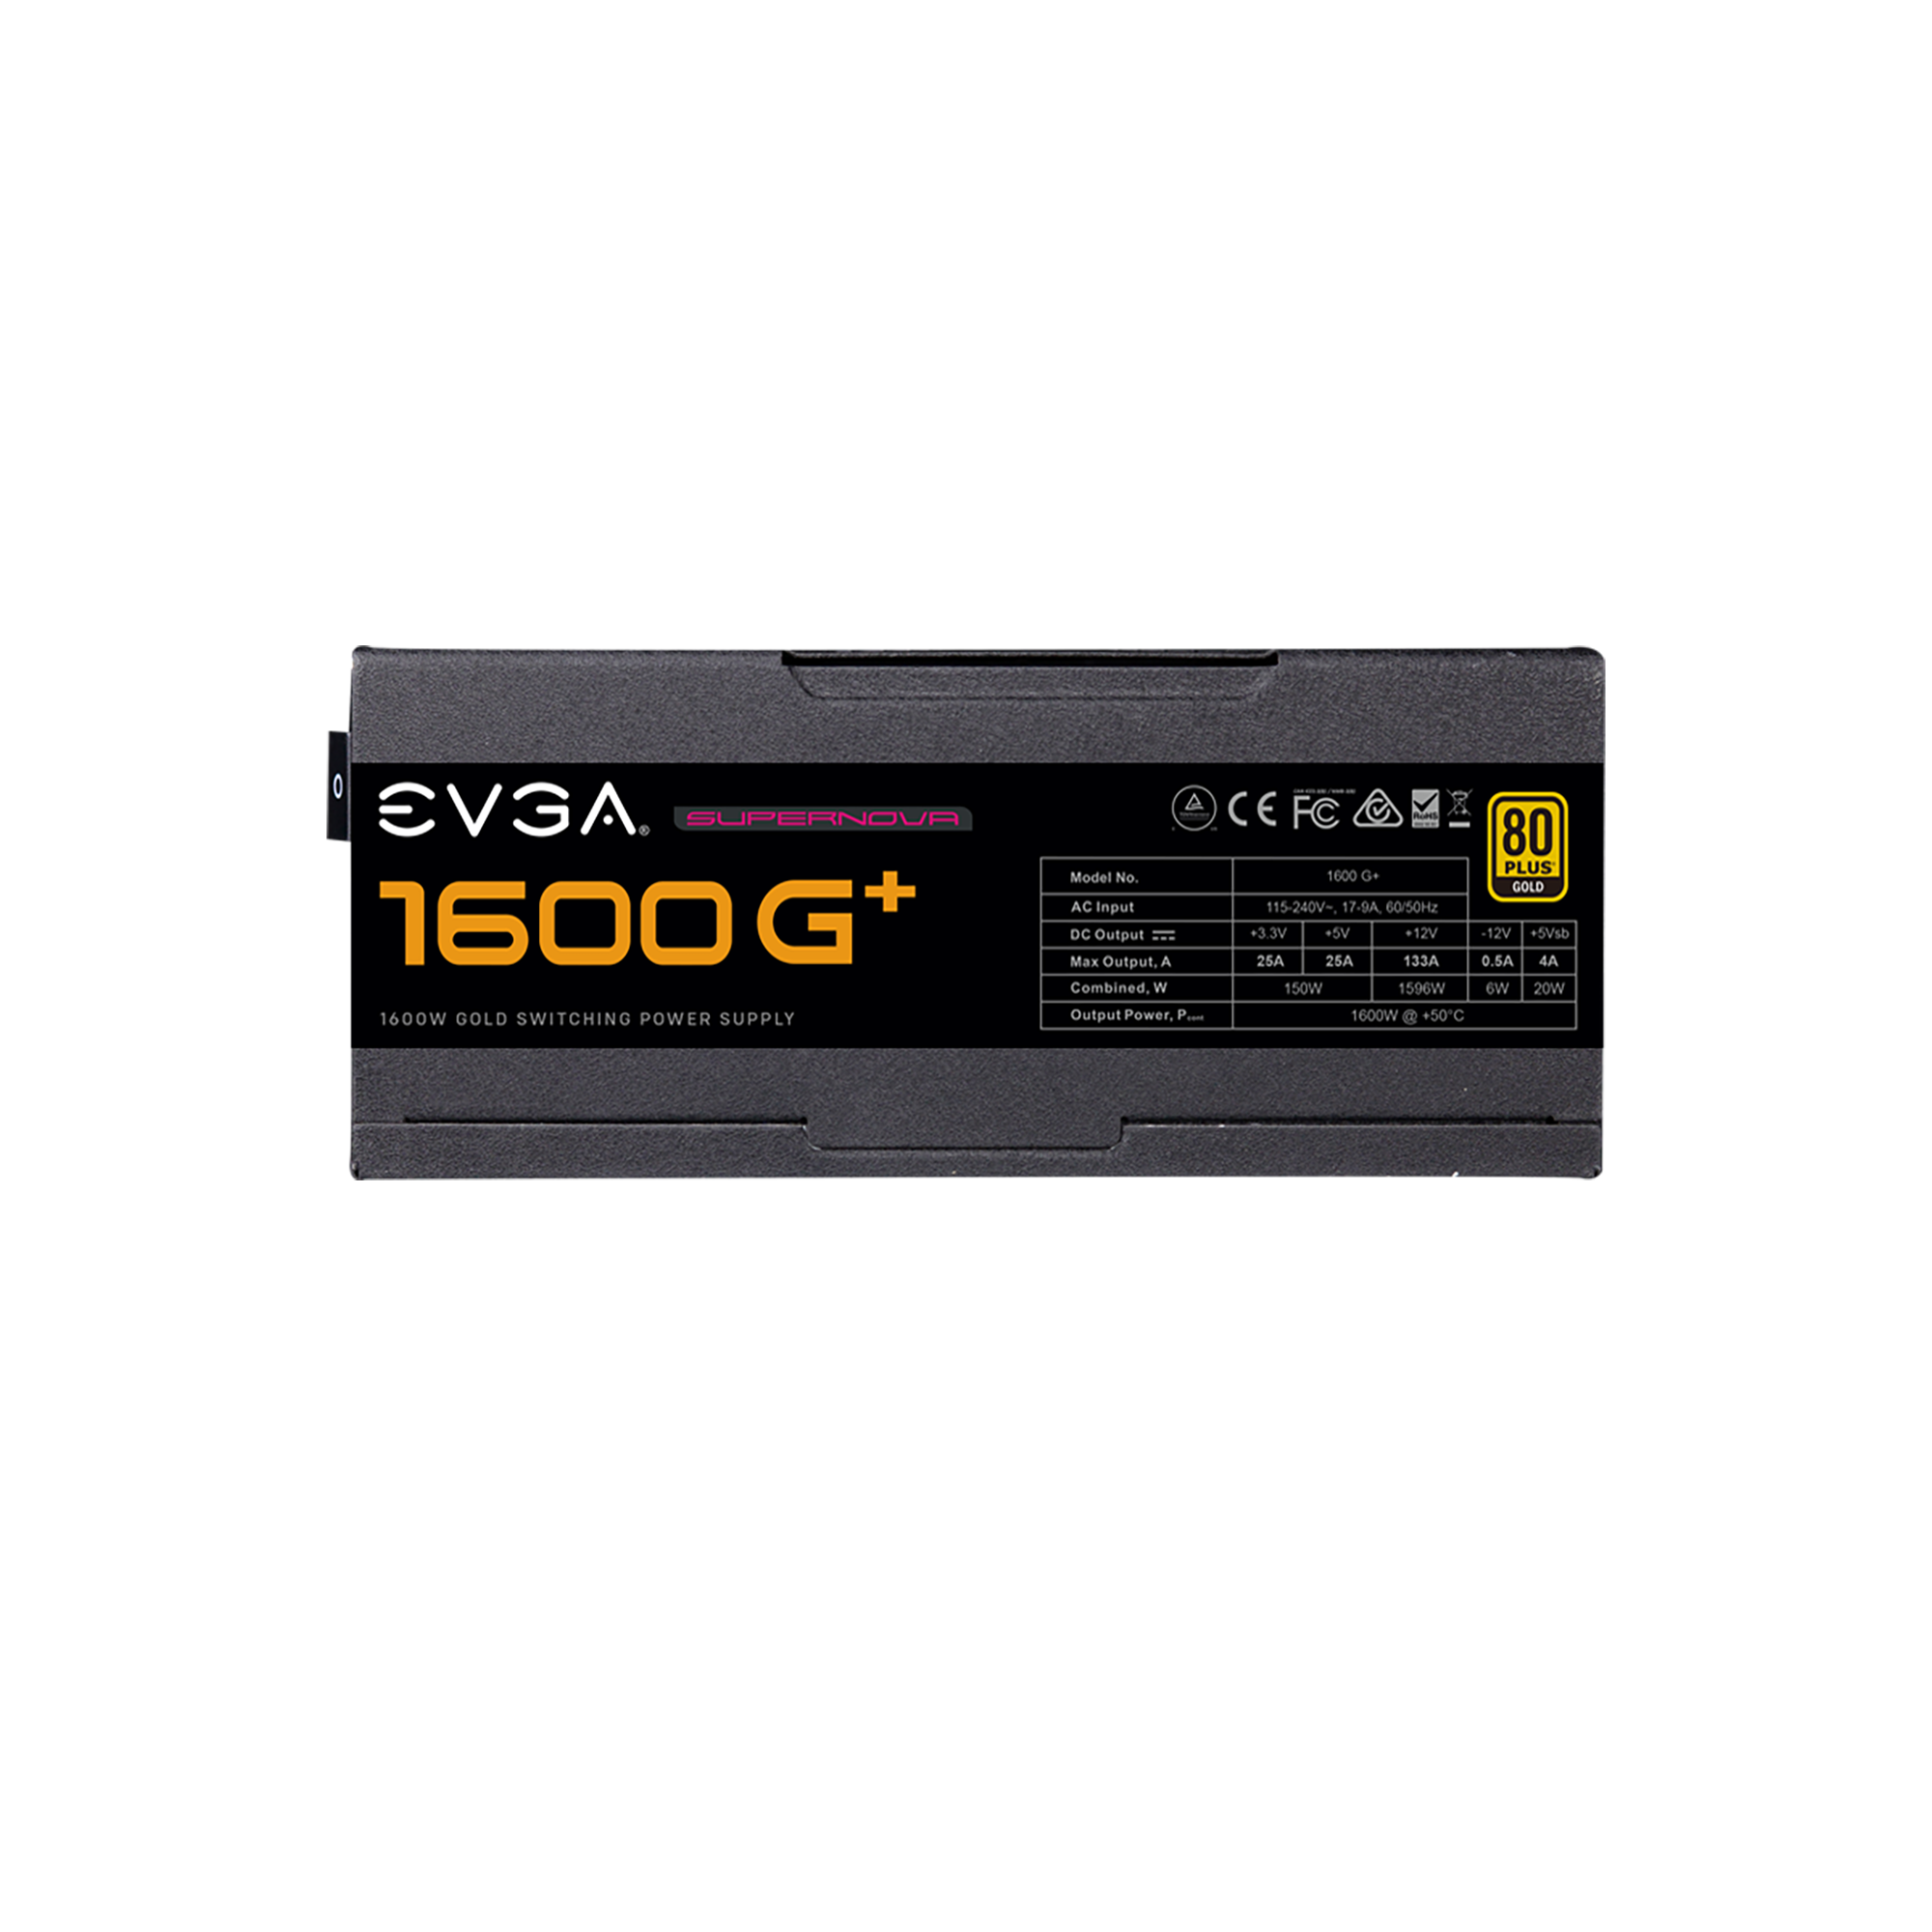 Fully Modular Includes Free Power On Self Tester 10 Year Warranty EVGA Supernova 1600 G+ 80+ Gold 1600W Power Supply 220-GP-1600-X1 